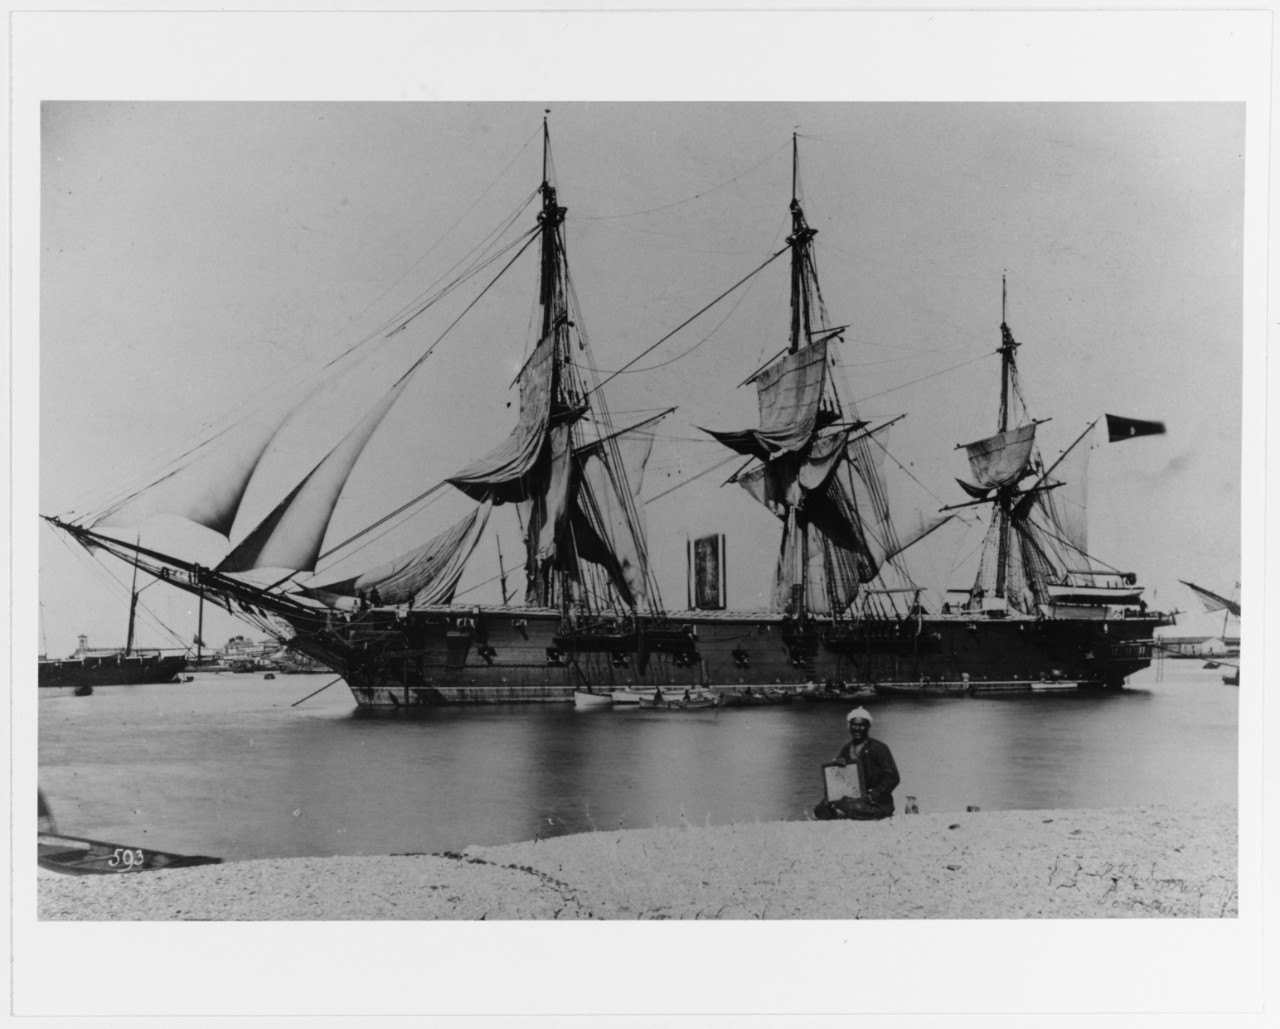 CONCEPTION (Spanish steam frigate, 1860-1900)